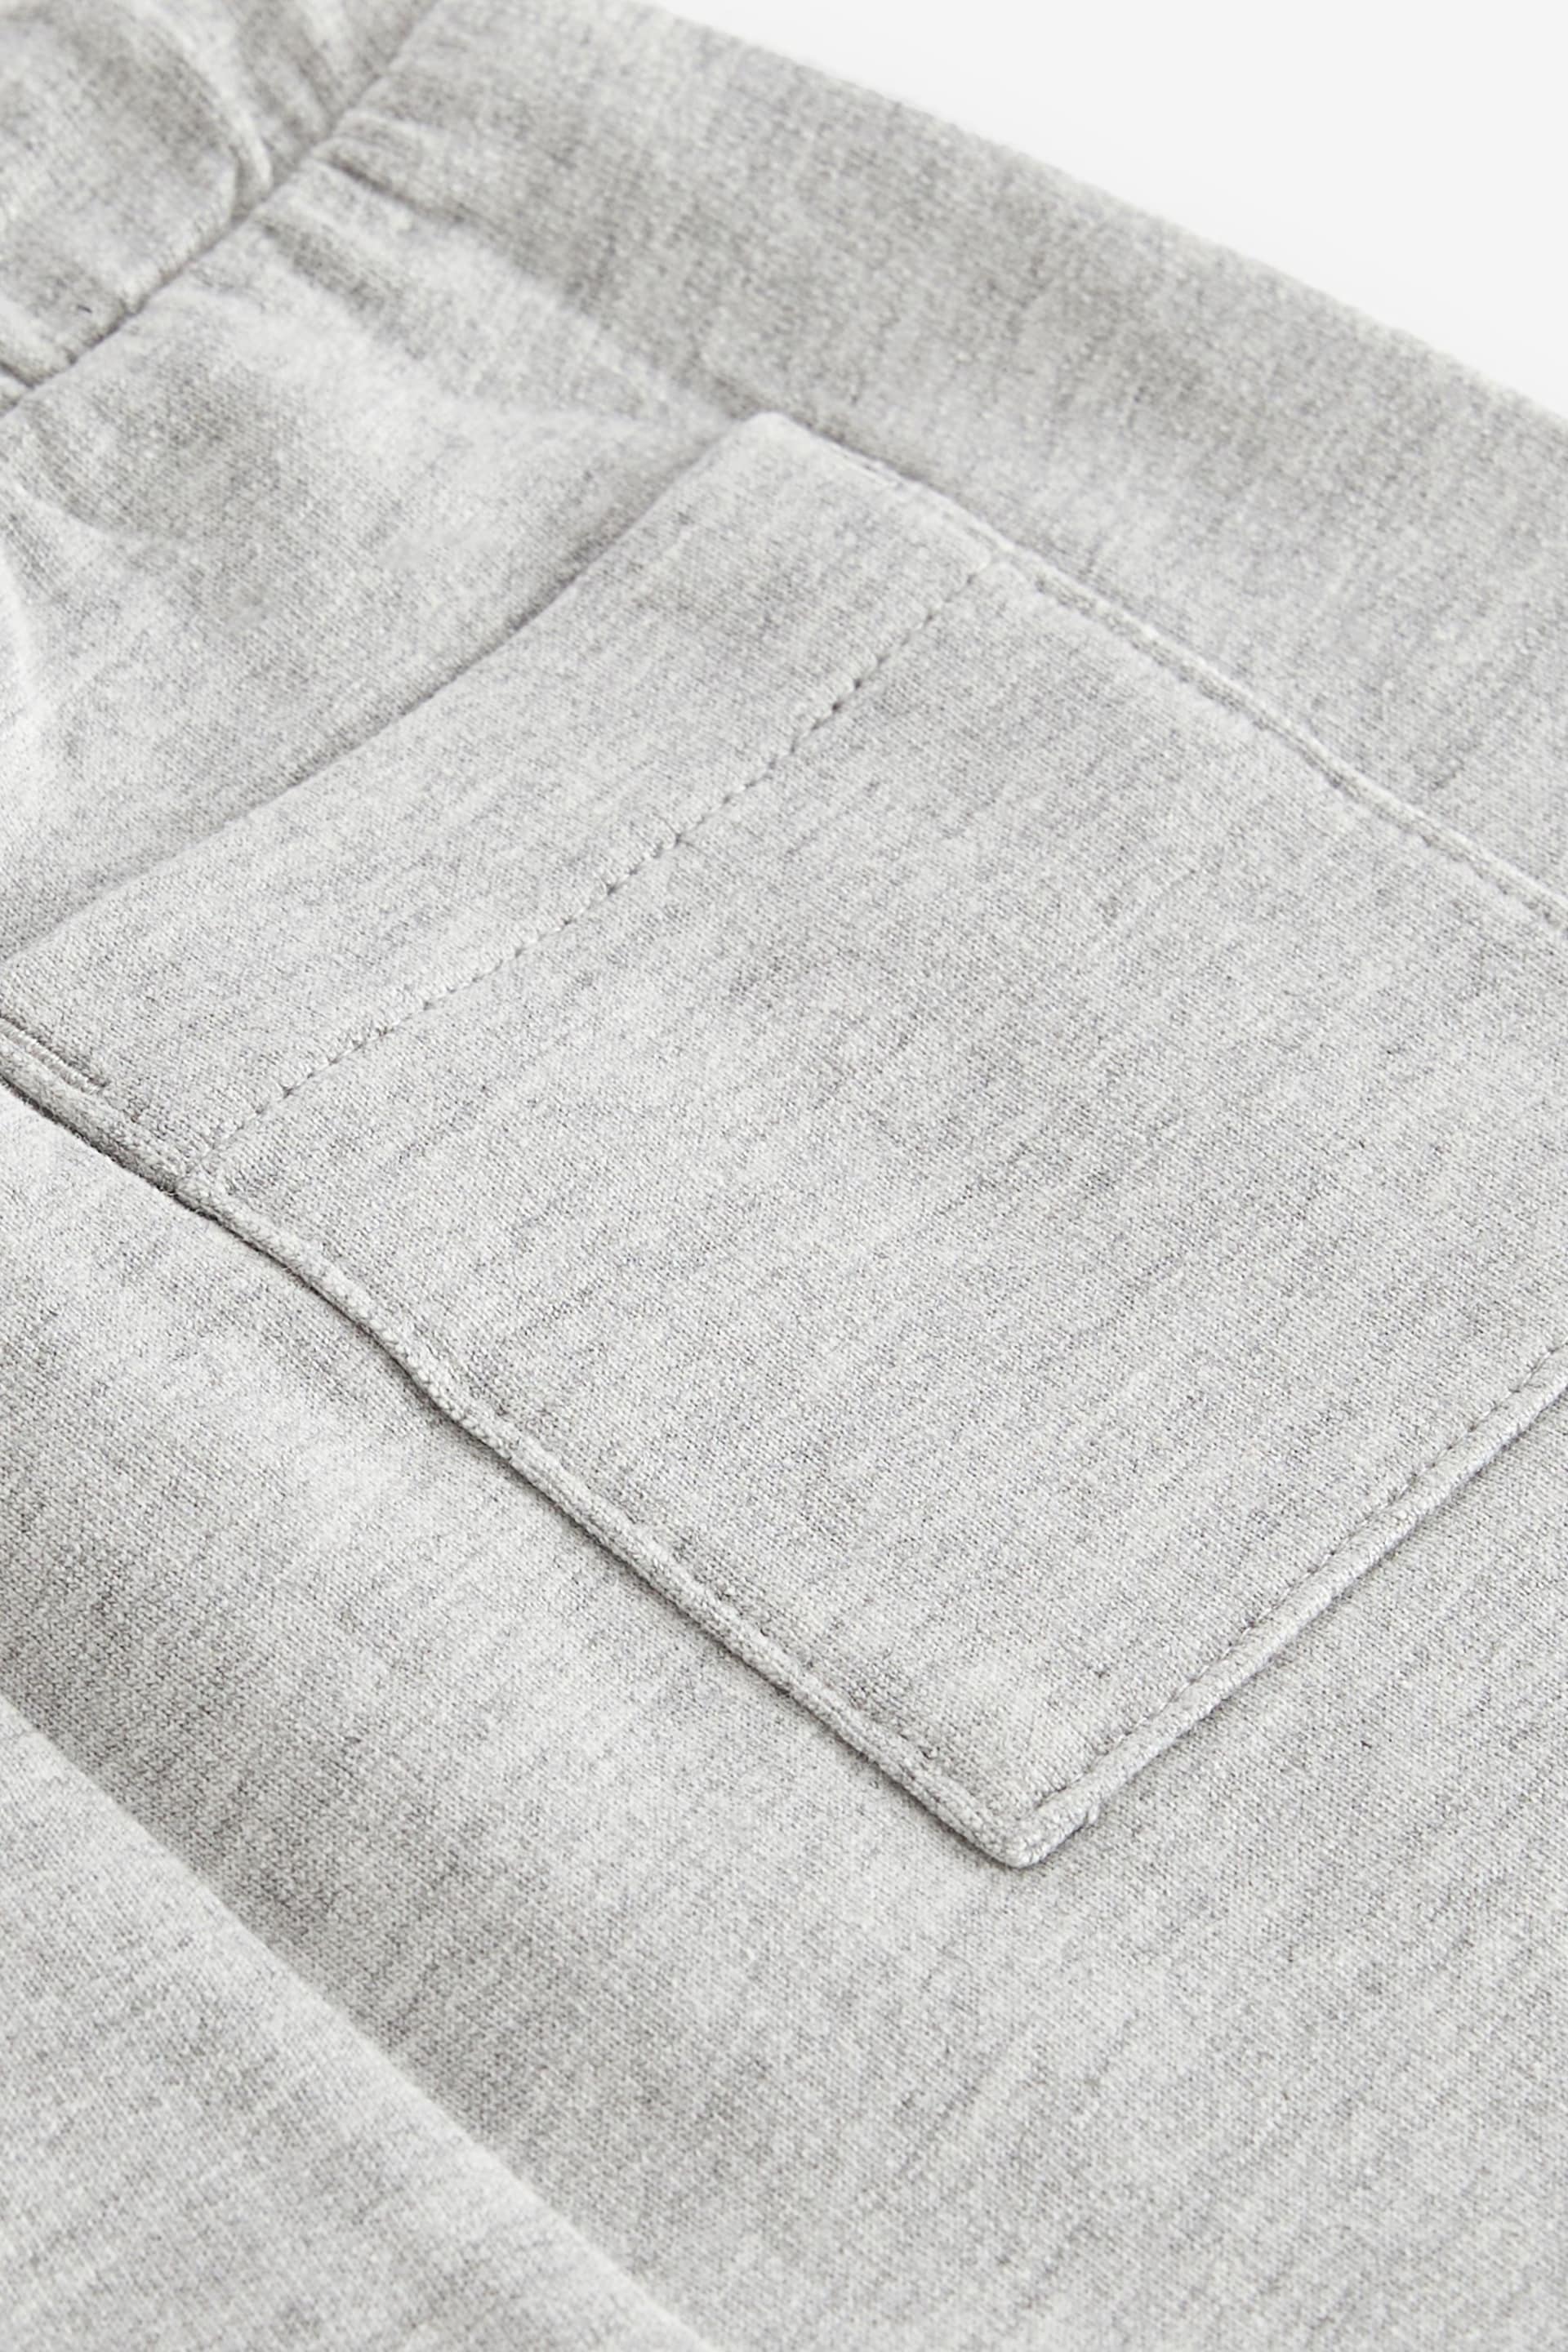 Grey Jersey Shorts (3mths-7yrs) - Image 4 of 4